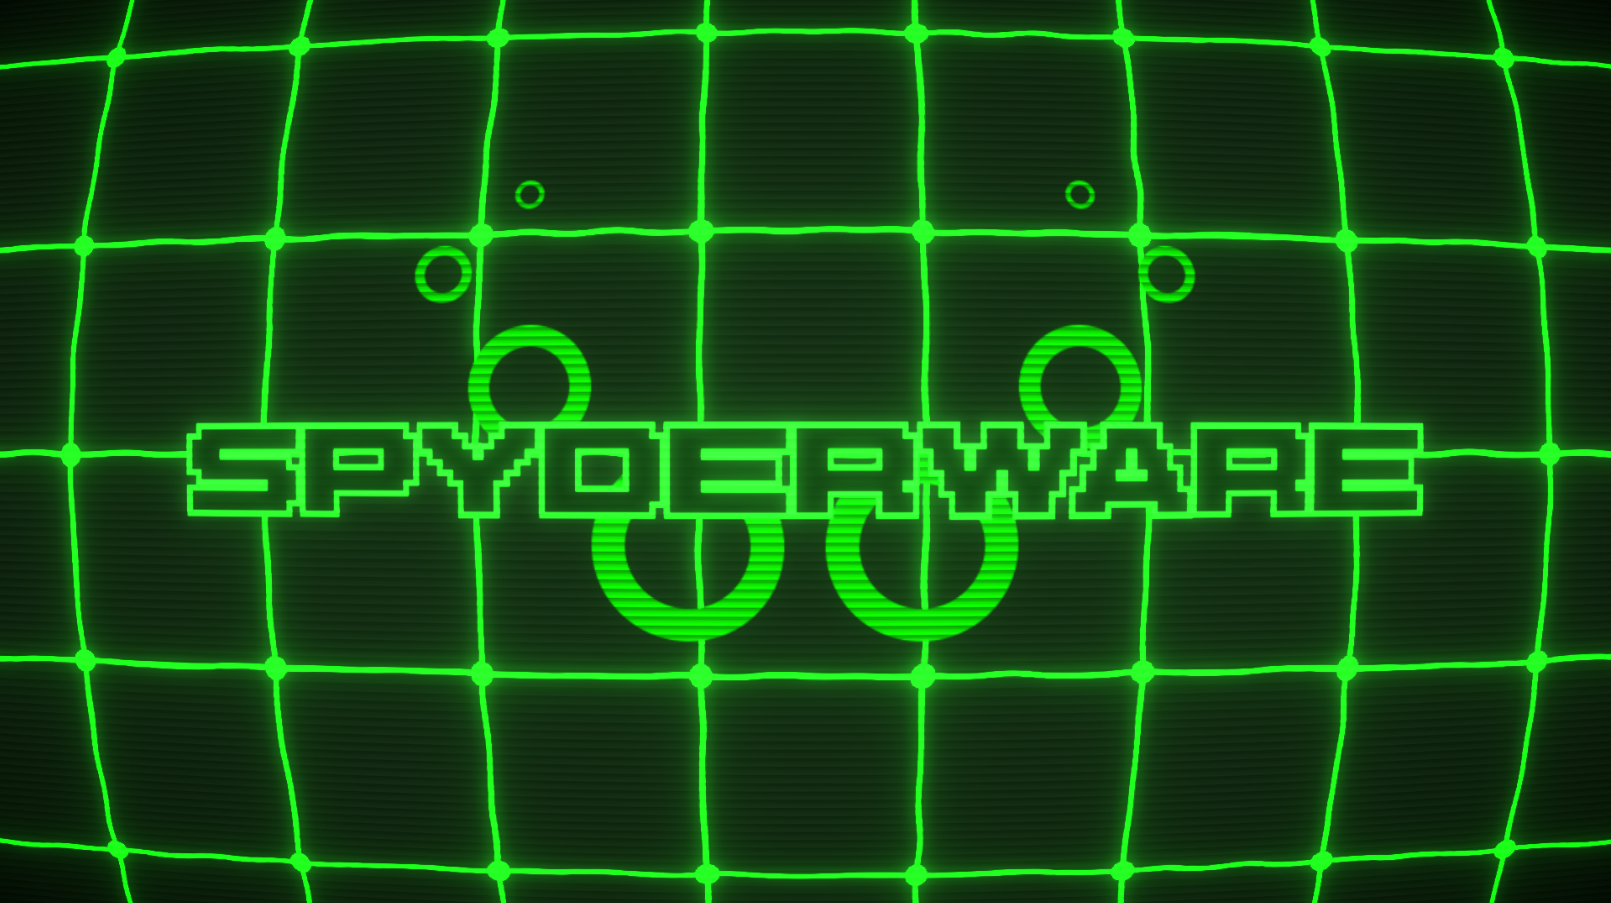 Spyderware